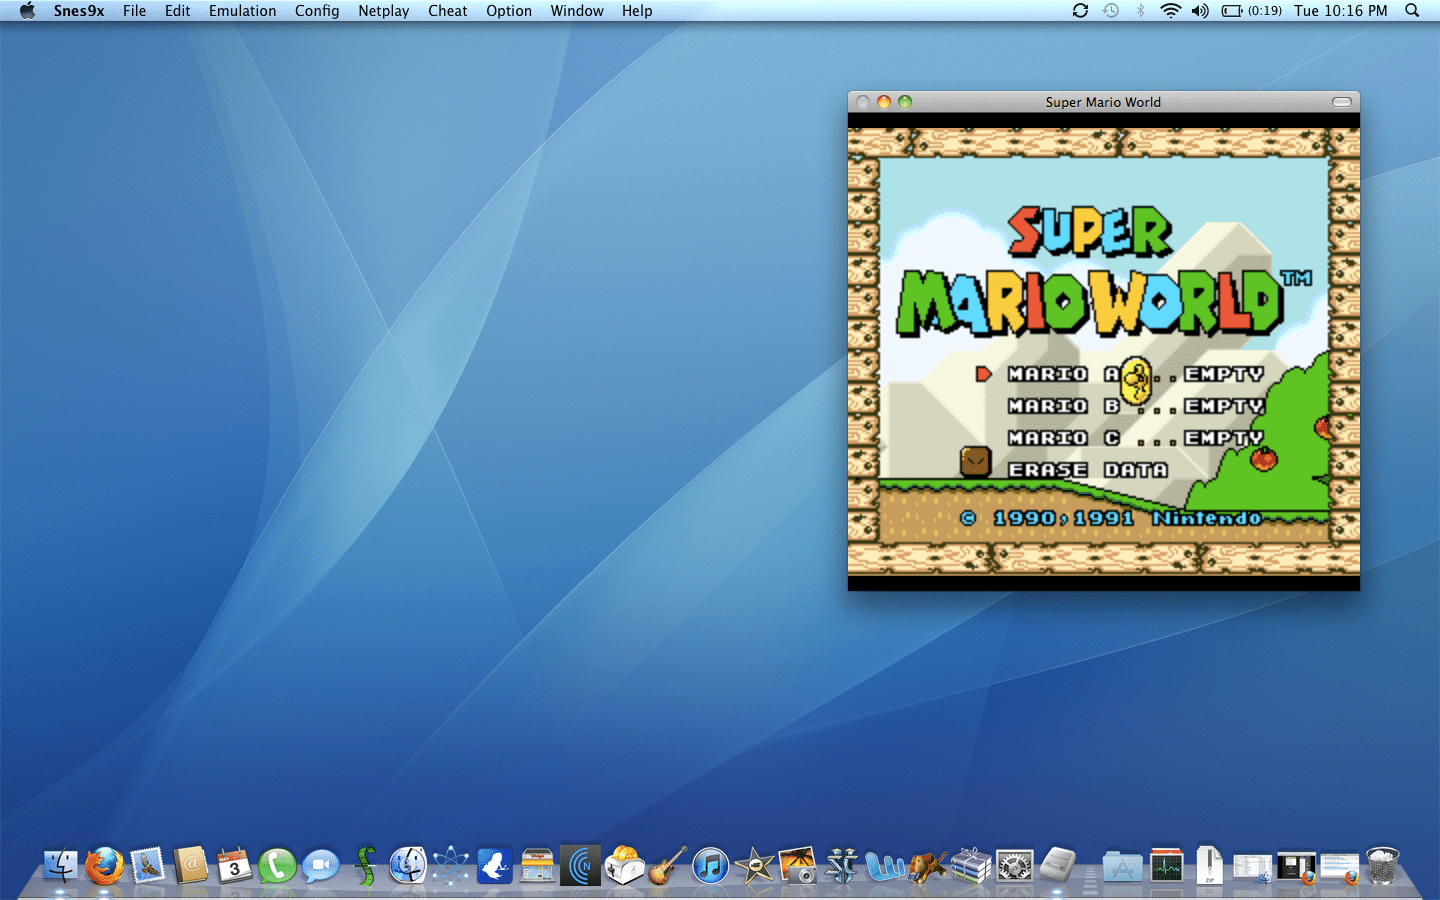 mac emulator for pc